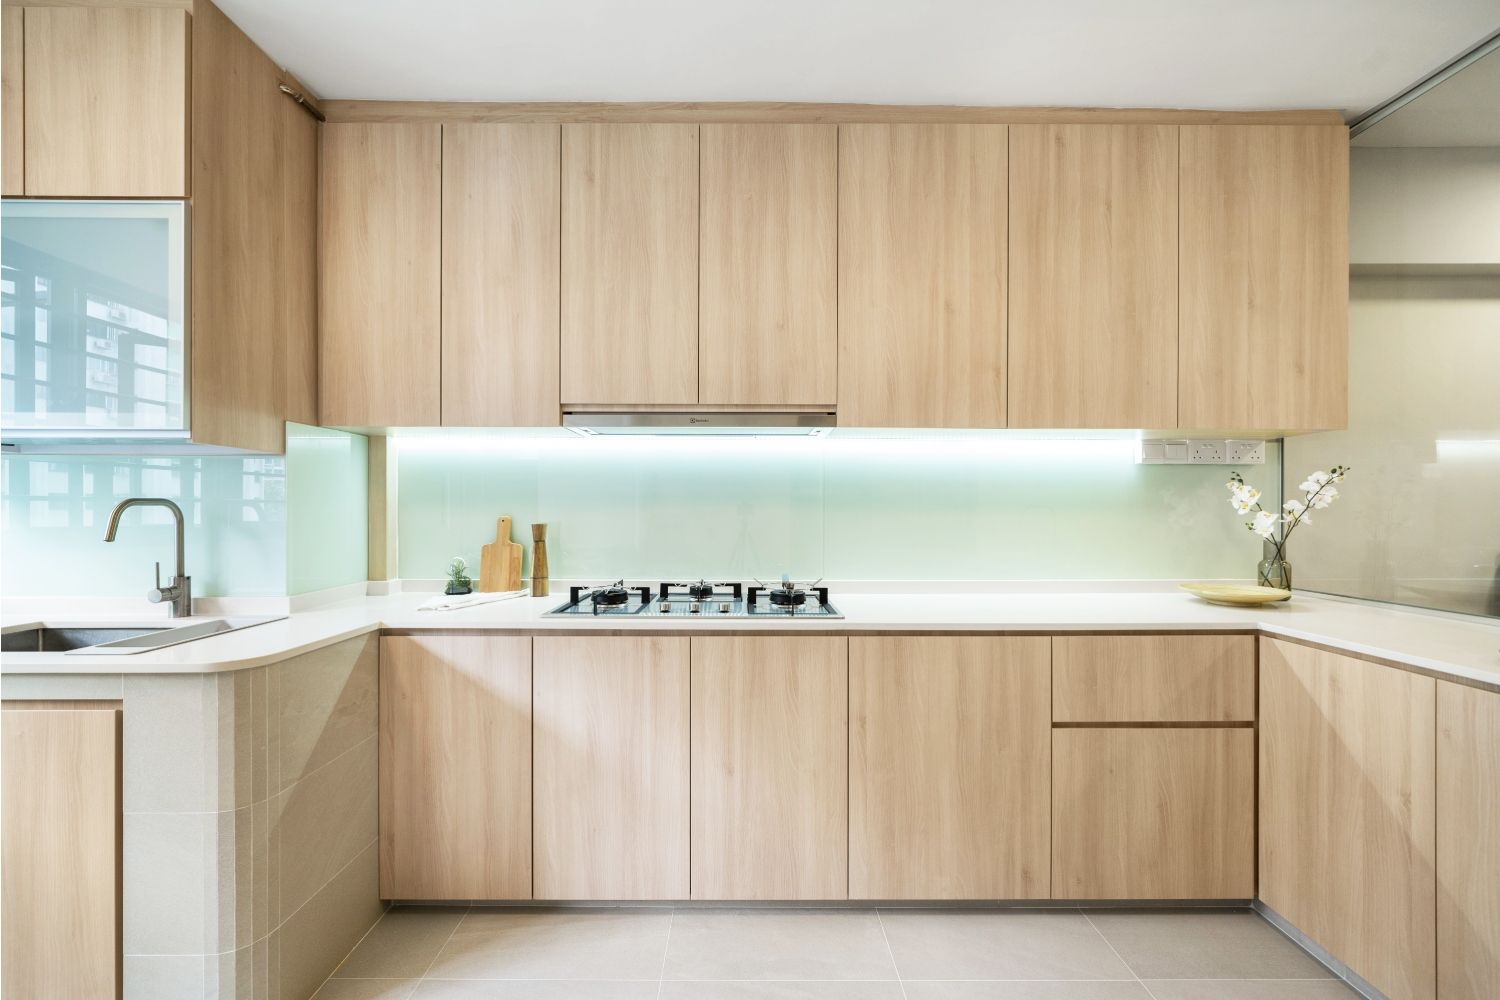 U-Shaped Kitchen With A Scandinavian Design